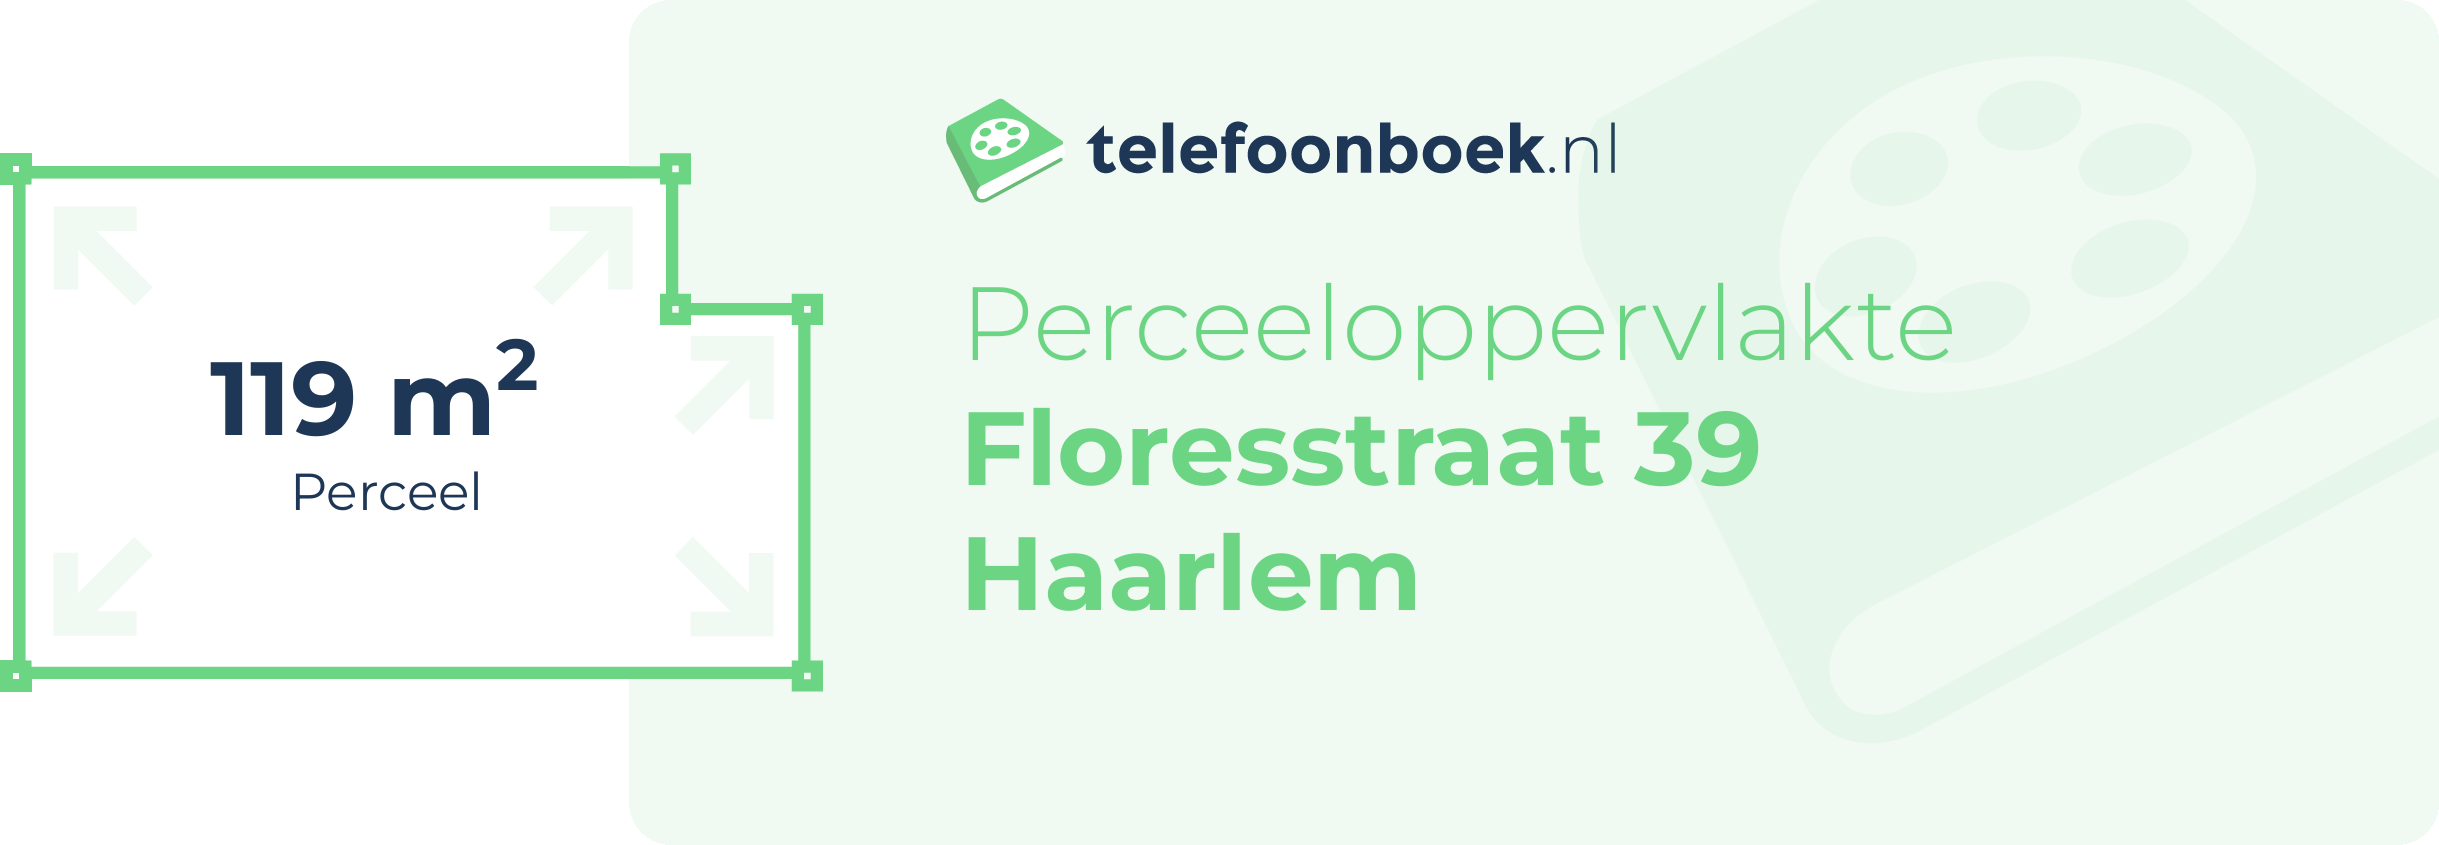 Perceeloppervlakte Floresstraat 39 Haarlem